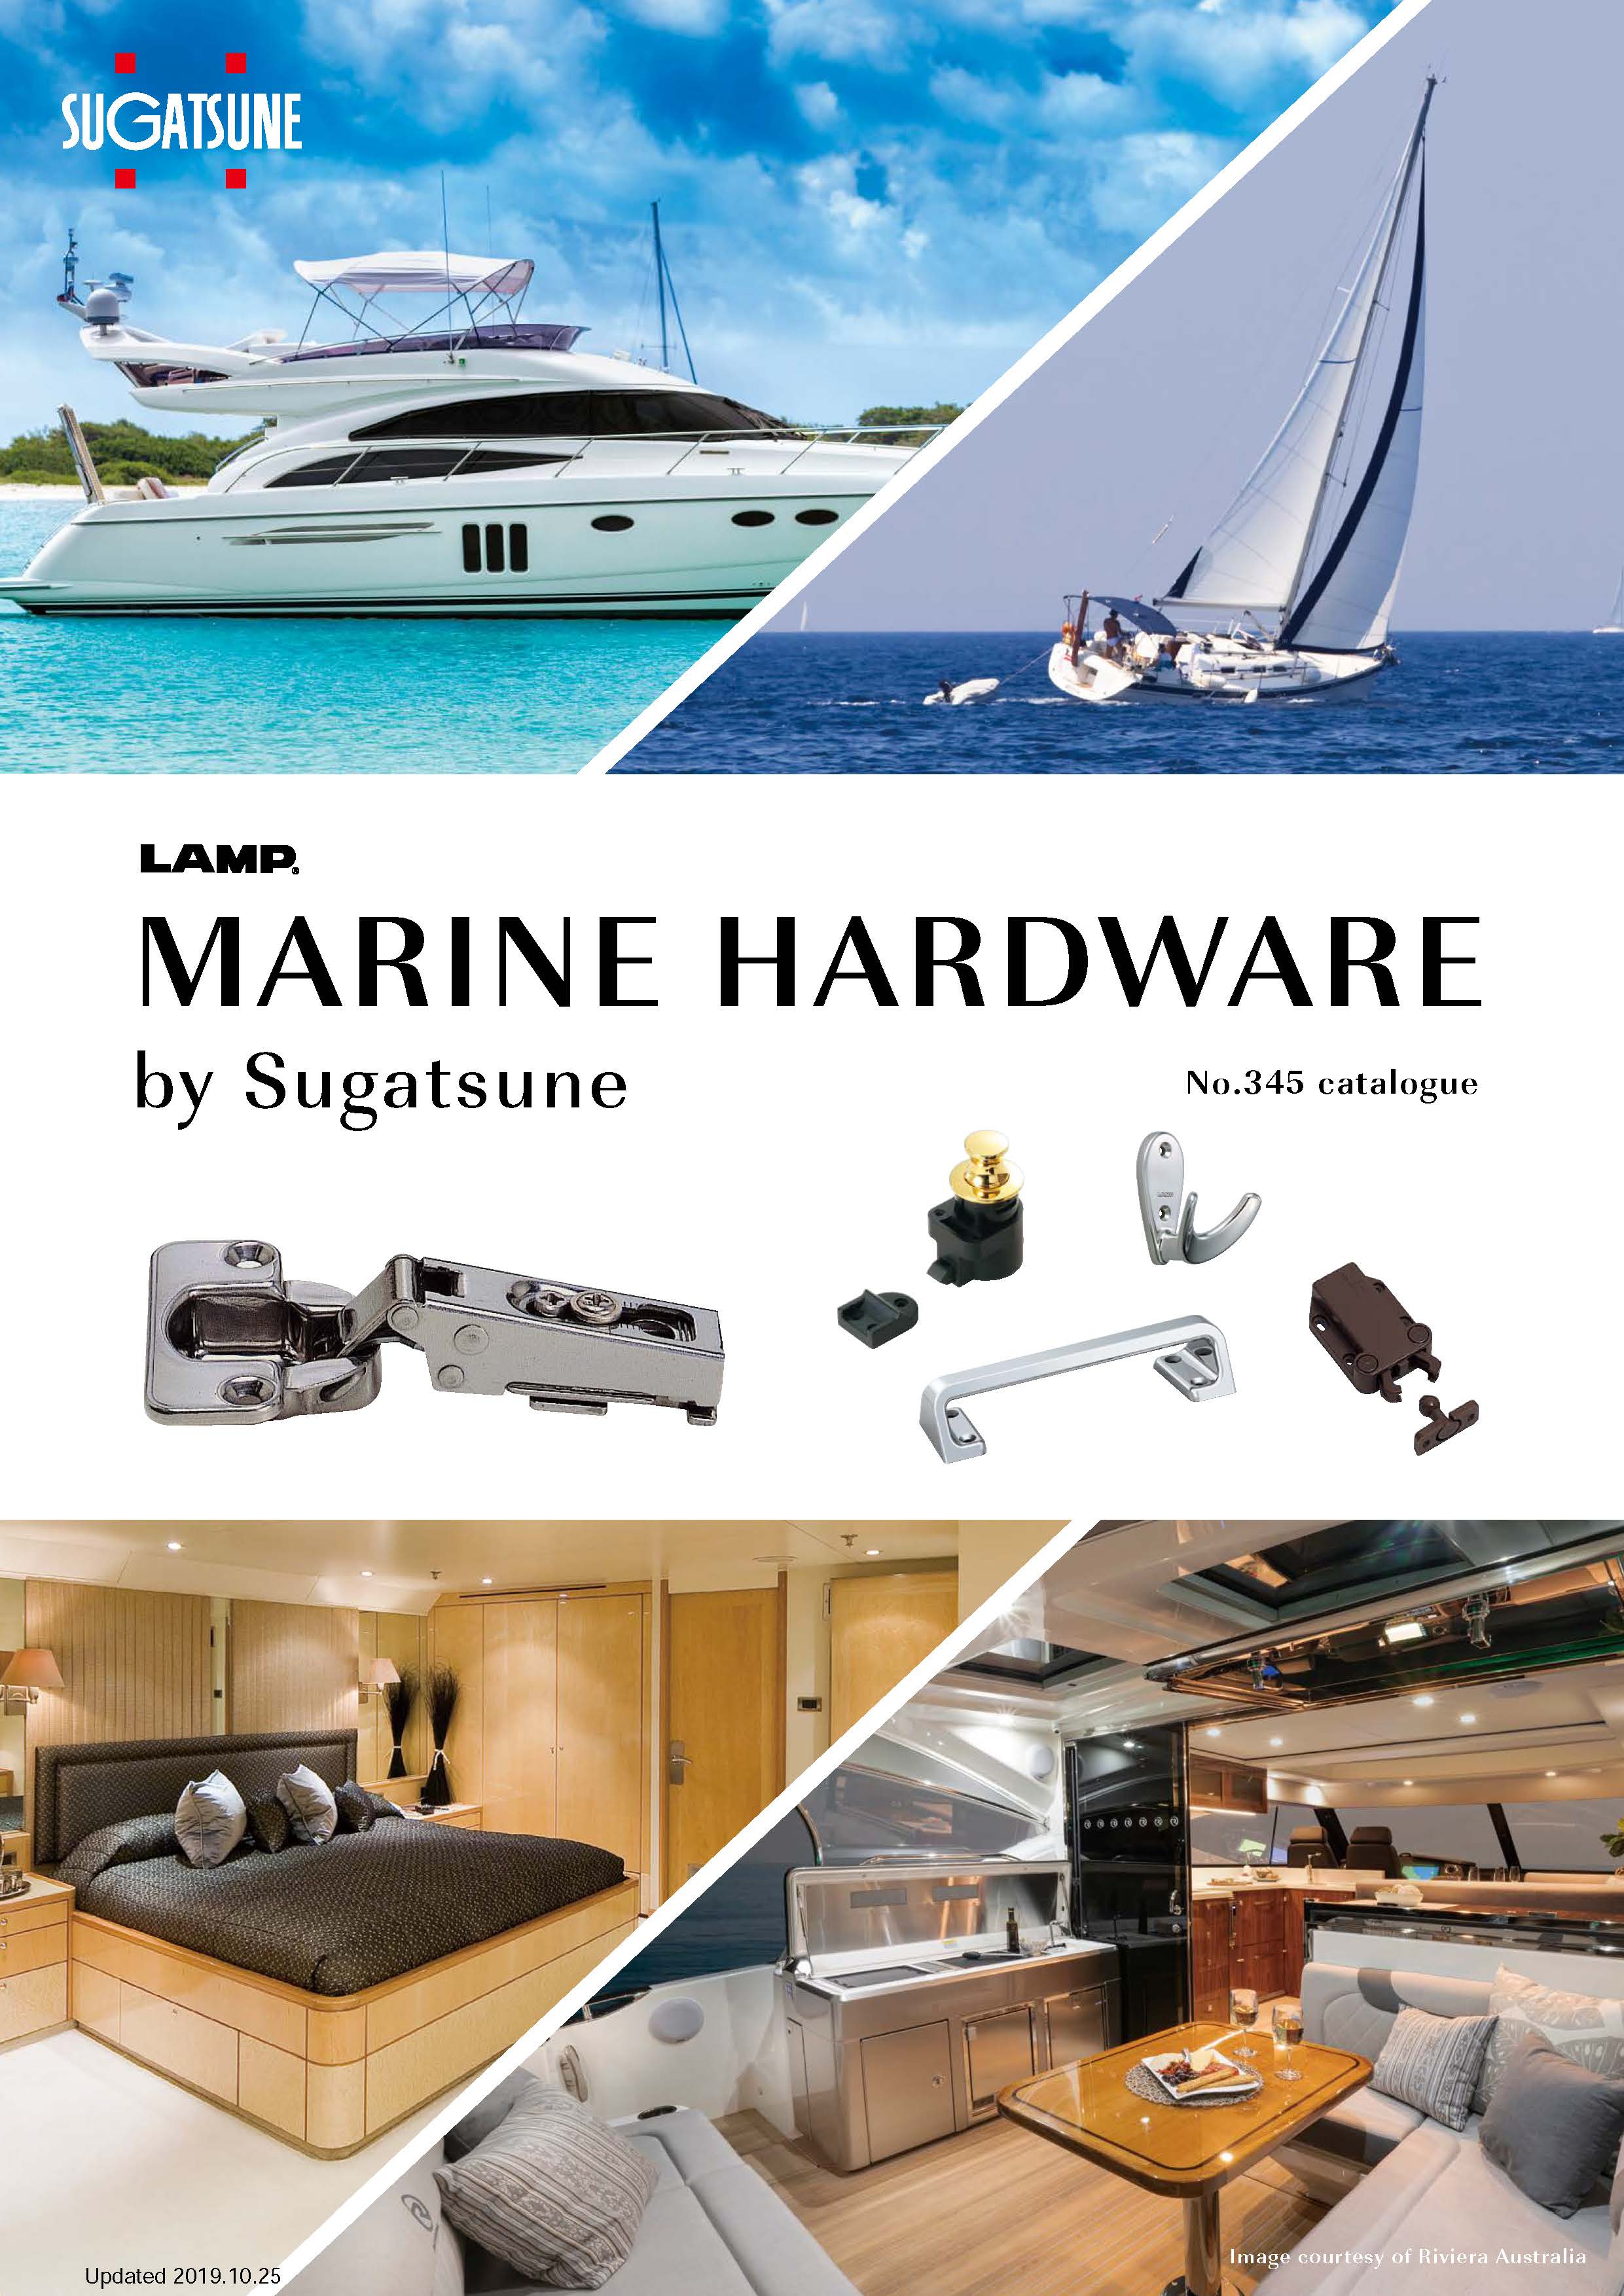 Sugatsune - Marine hardware